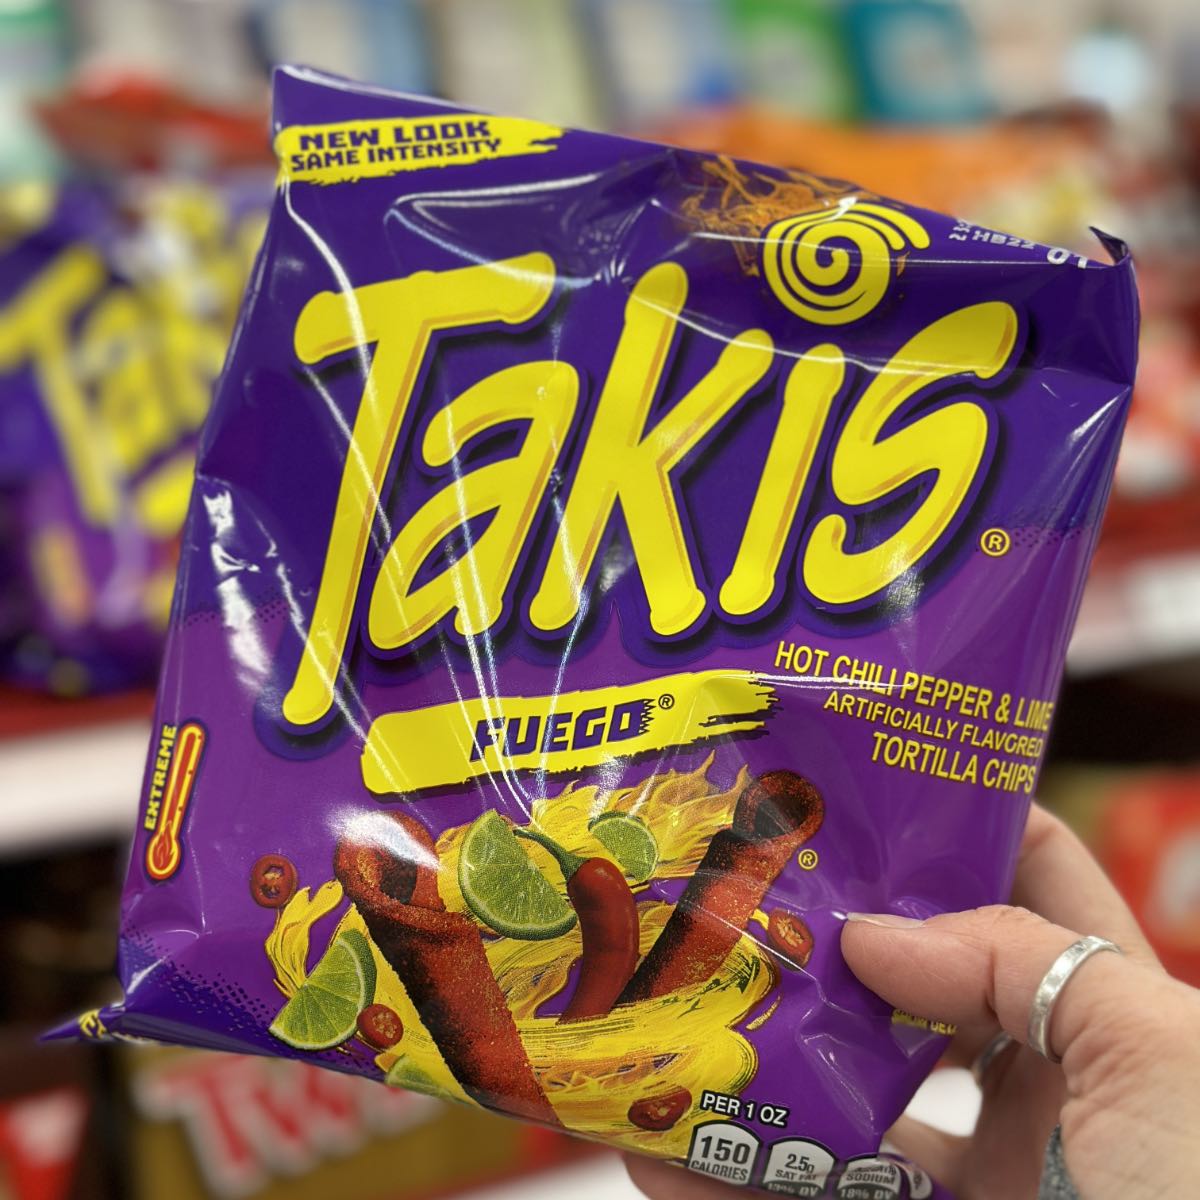 A purple bag of vegan Takis fuego